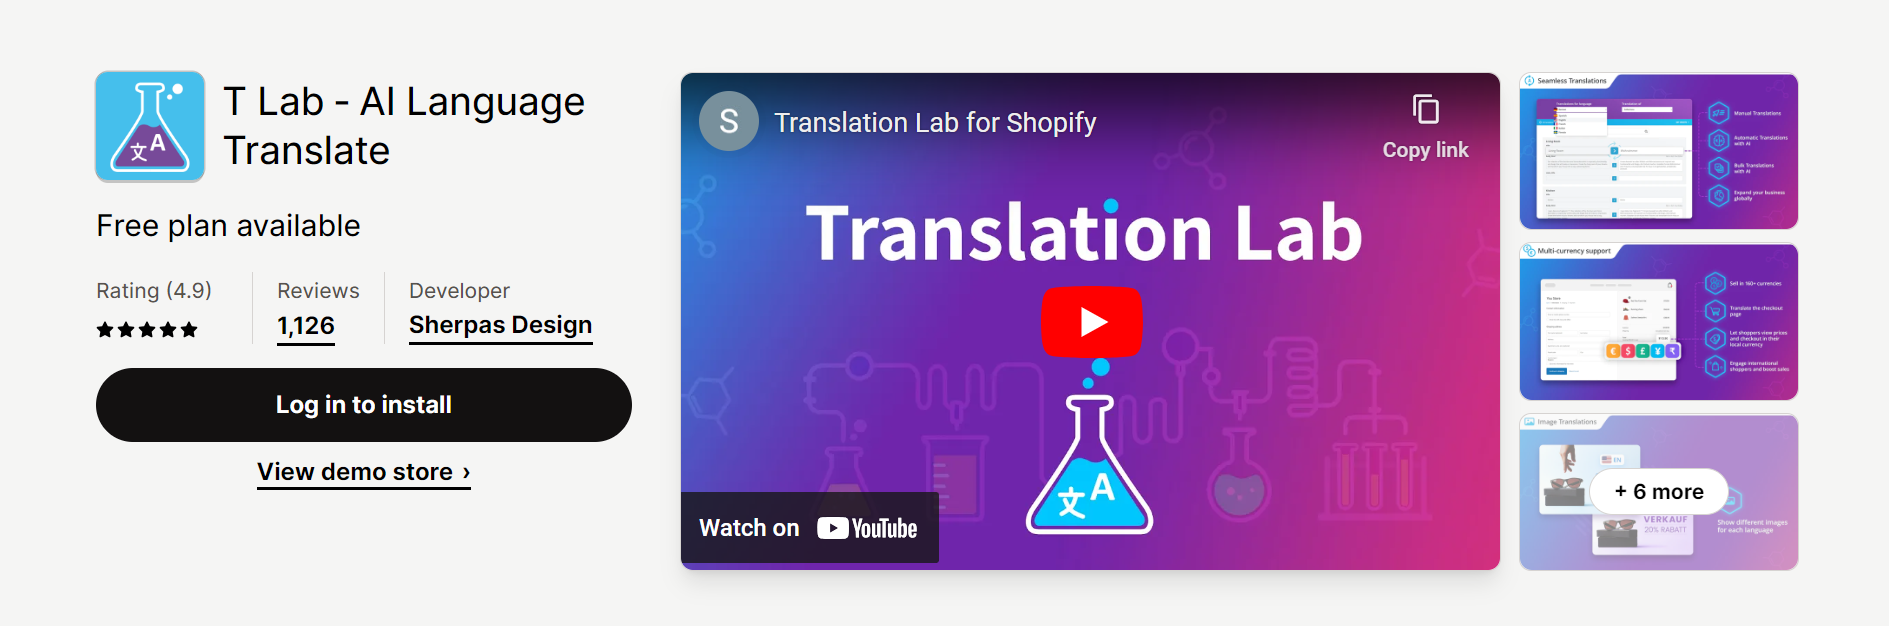 T Lab ‑ AI-Language Translate